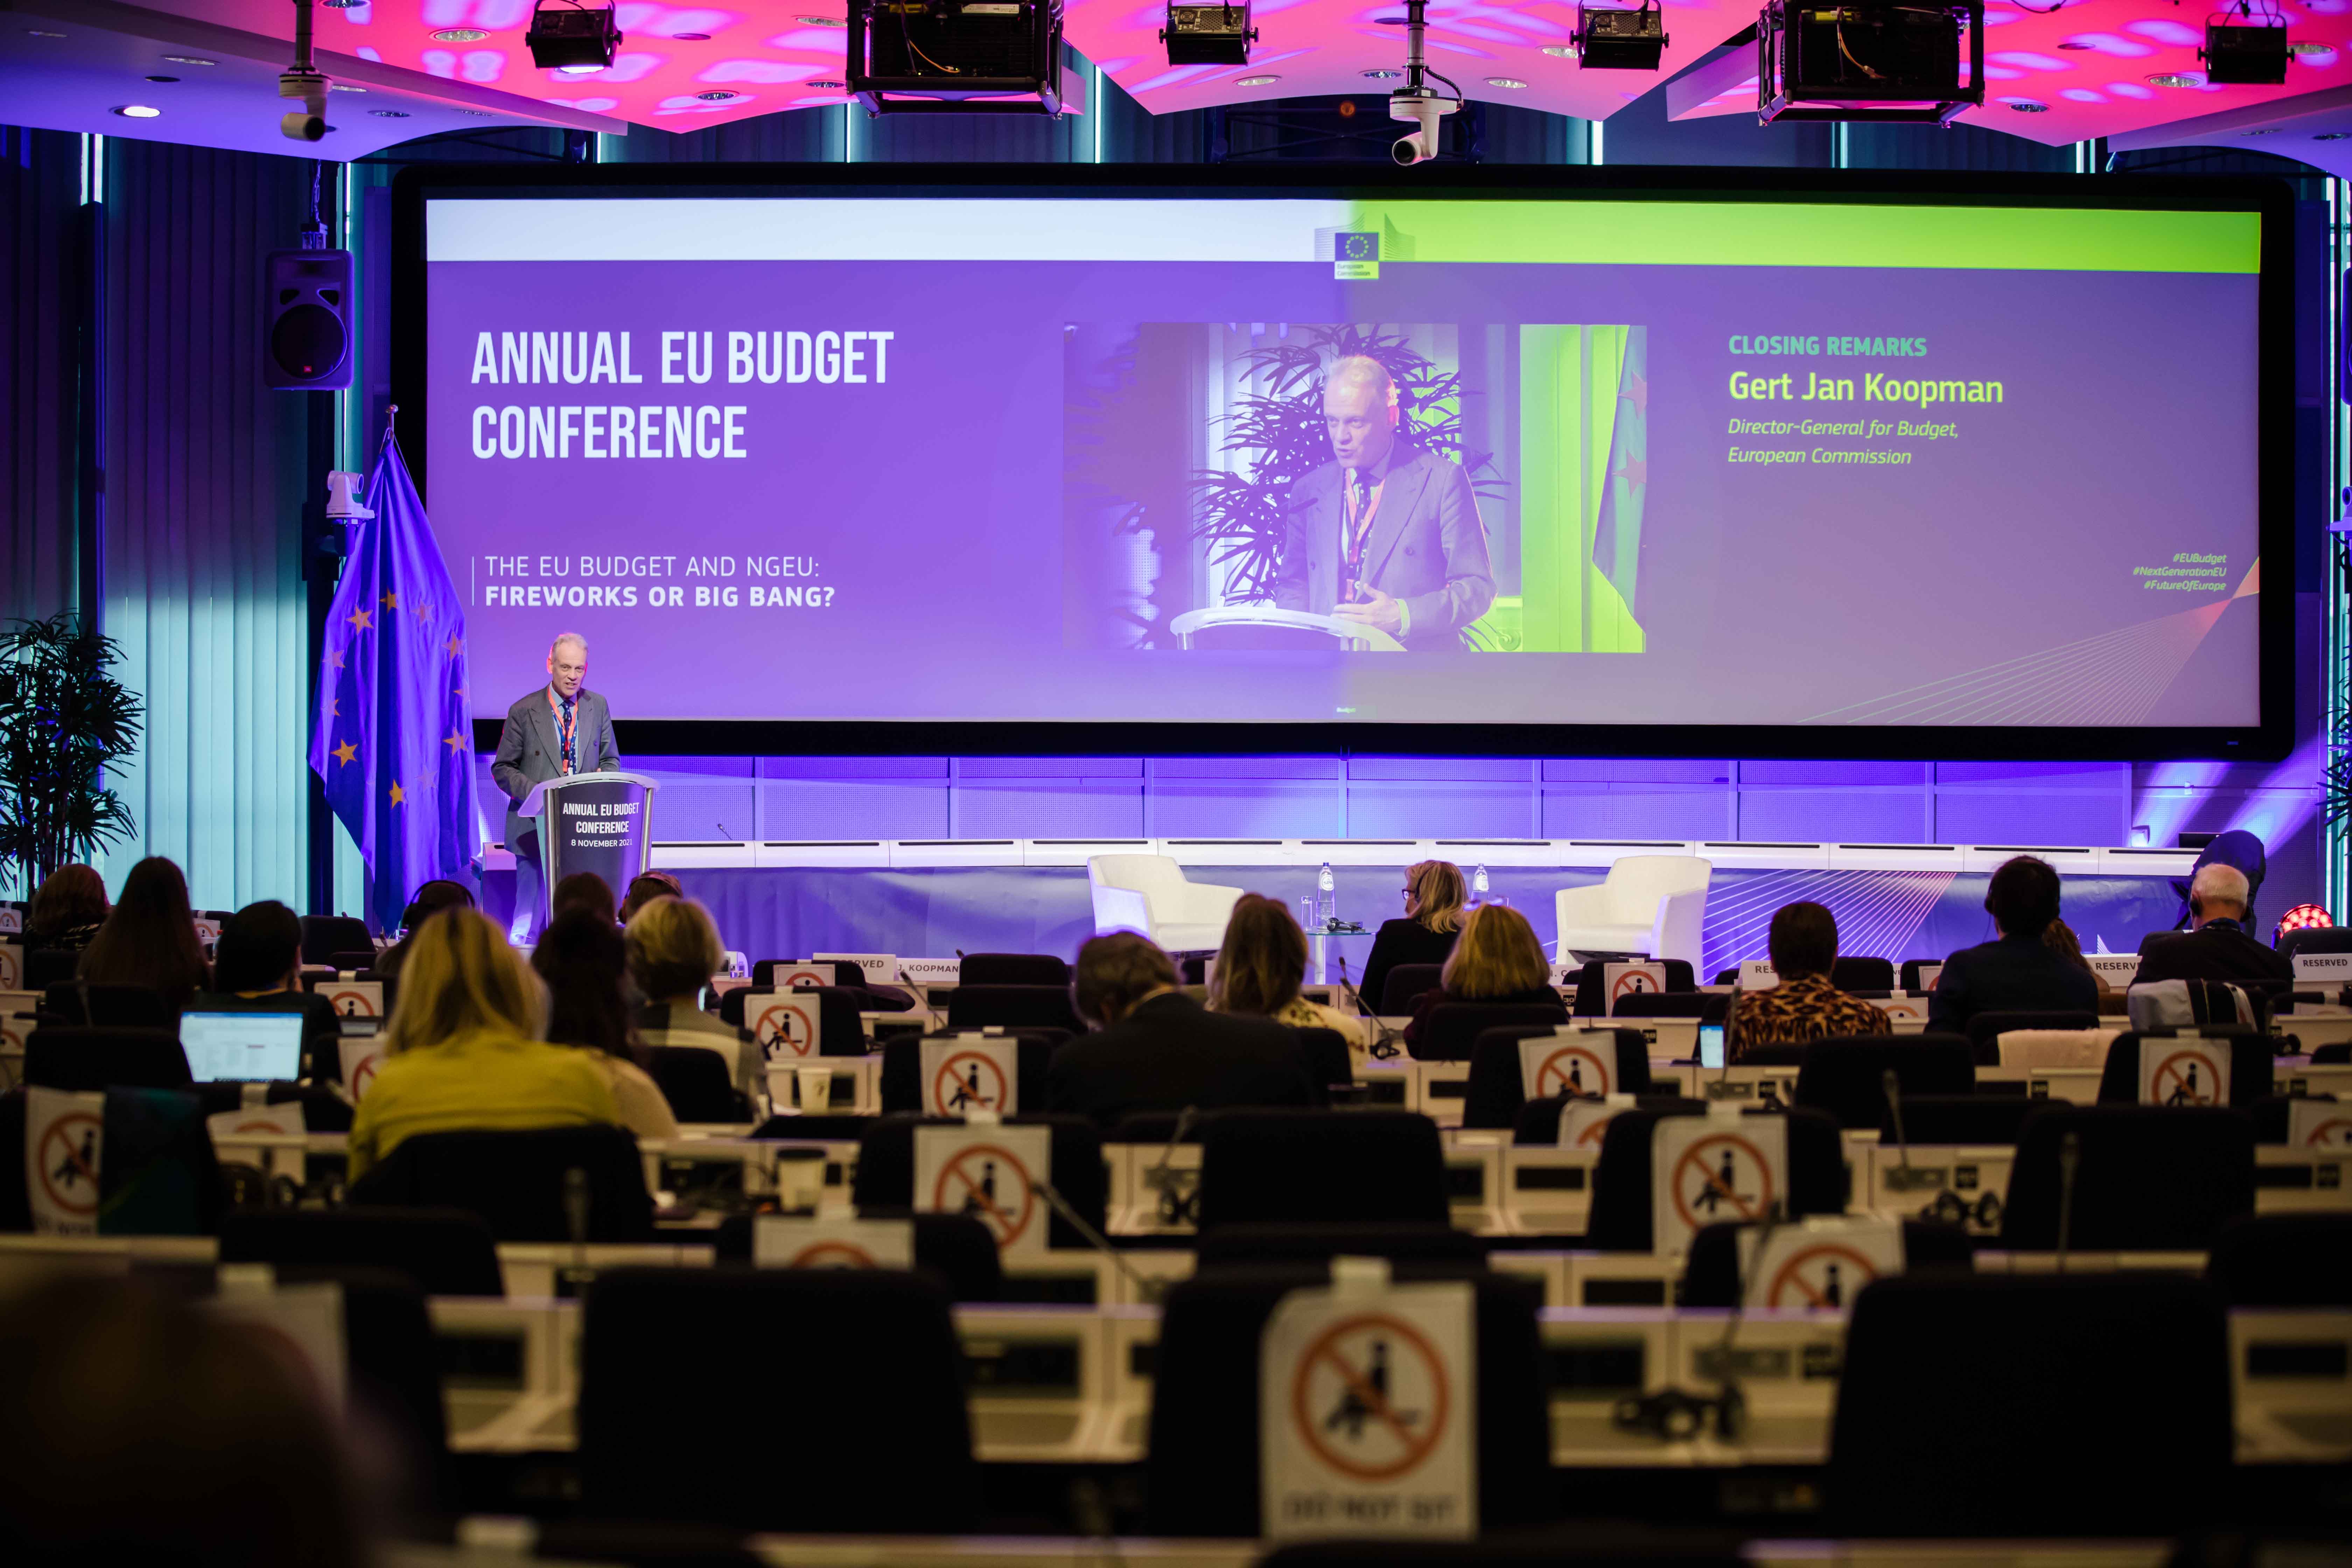 Annual EU Budget Conference 2021 - Closing Remarks by Gert Jan Koopman